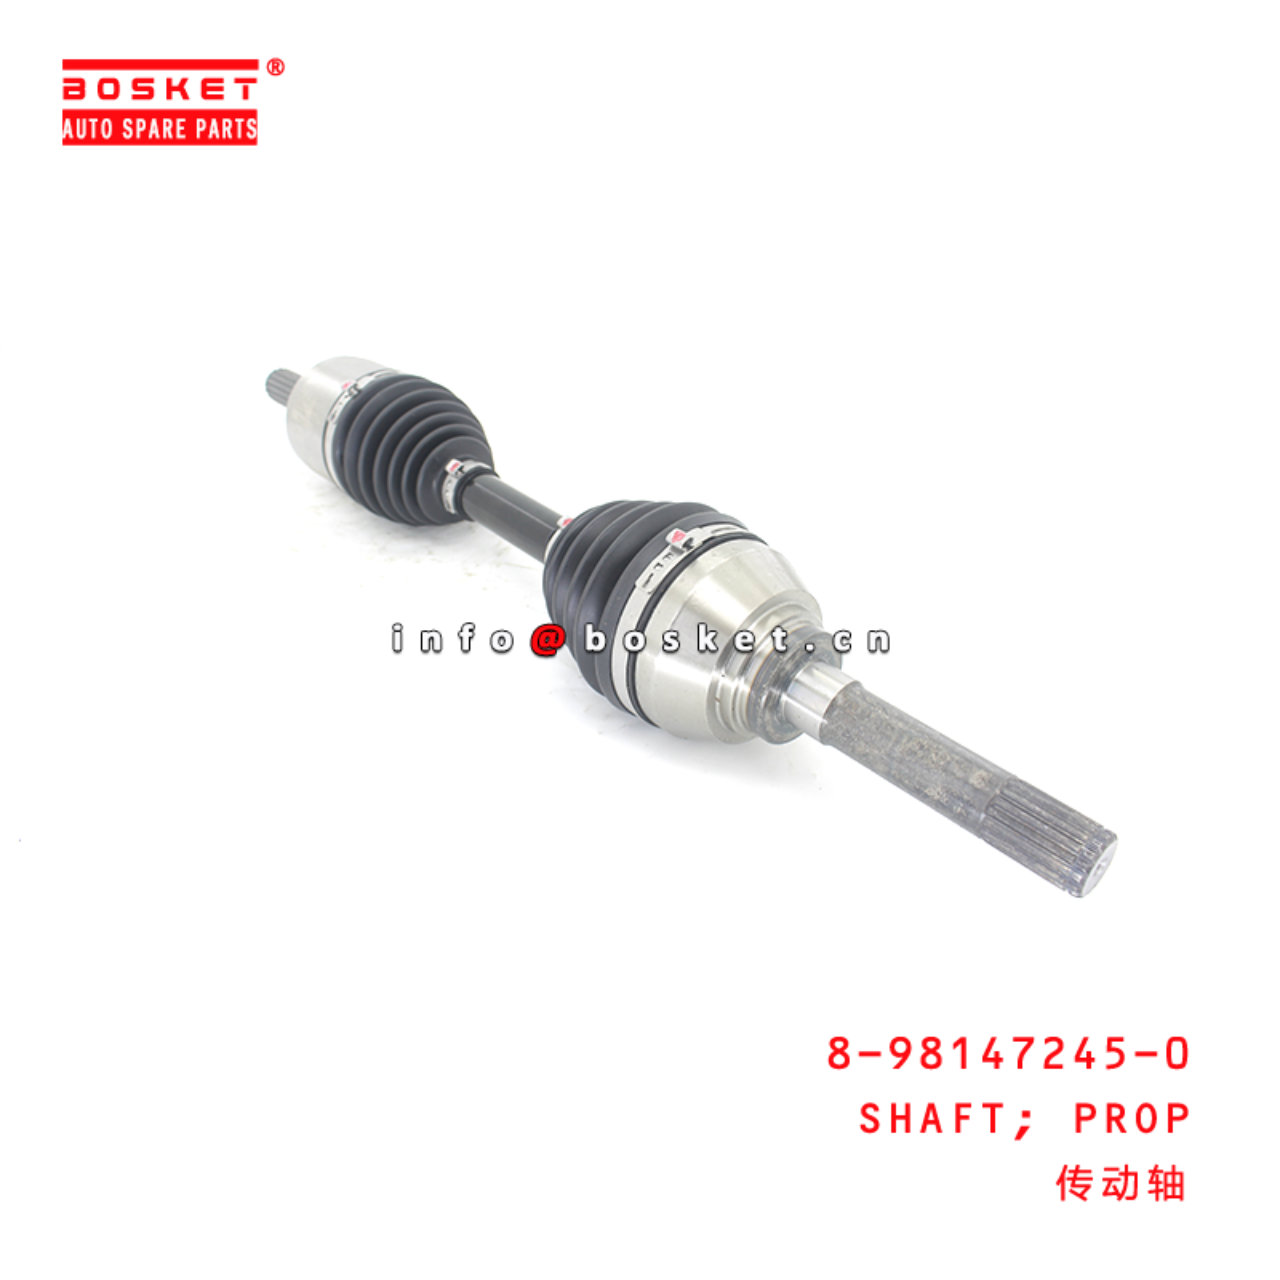 8-98147245-0 Propeller Shaft Suitable for ISUZU DM...